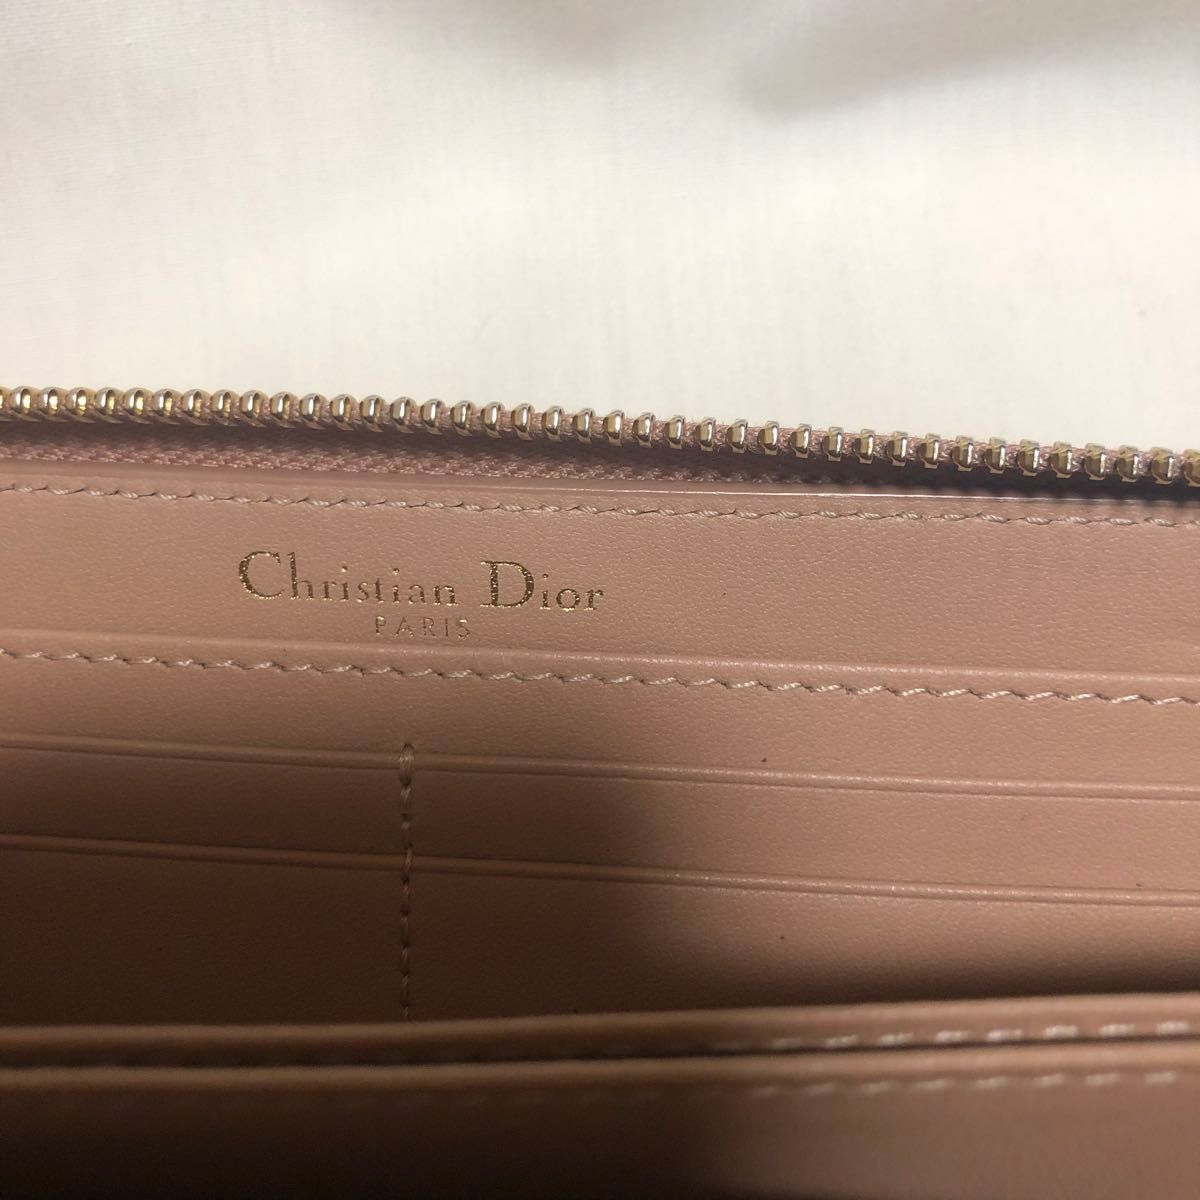 Dior 財布 長財布 ピンク クリスチャンディオール